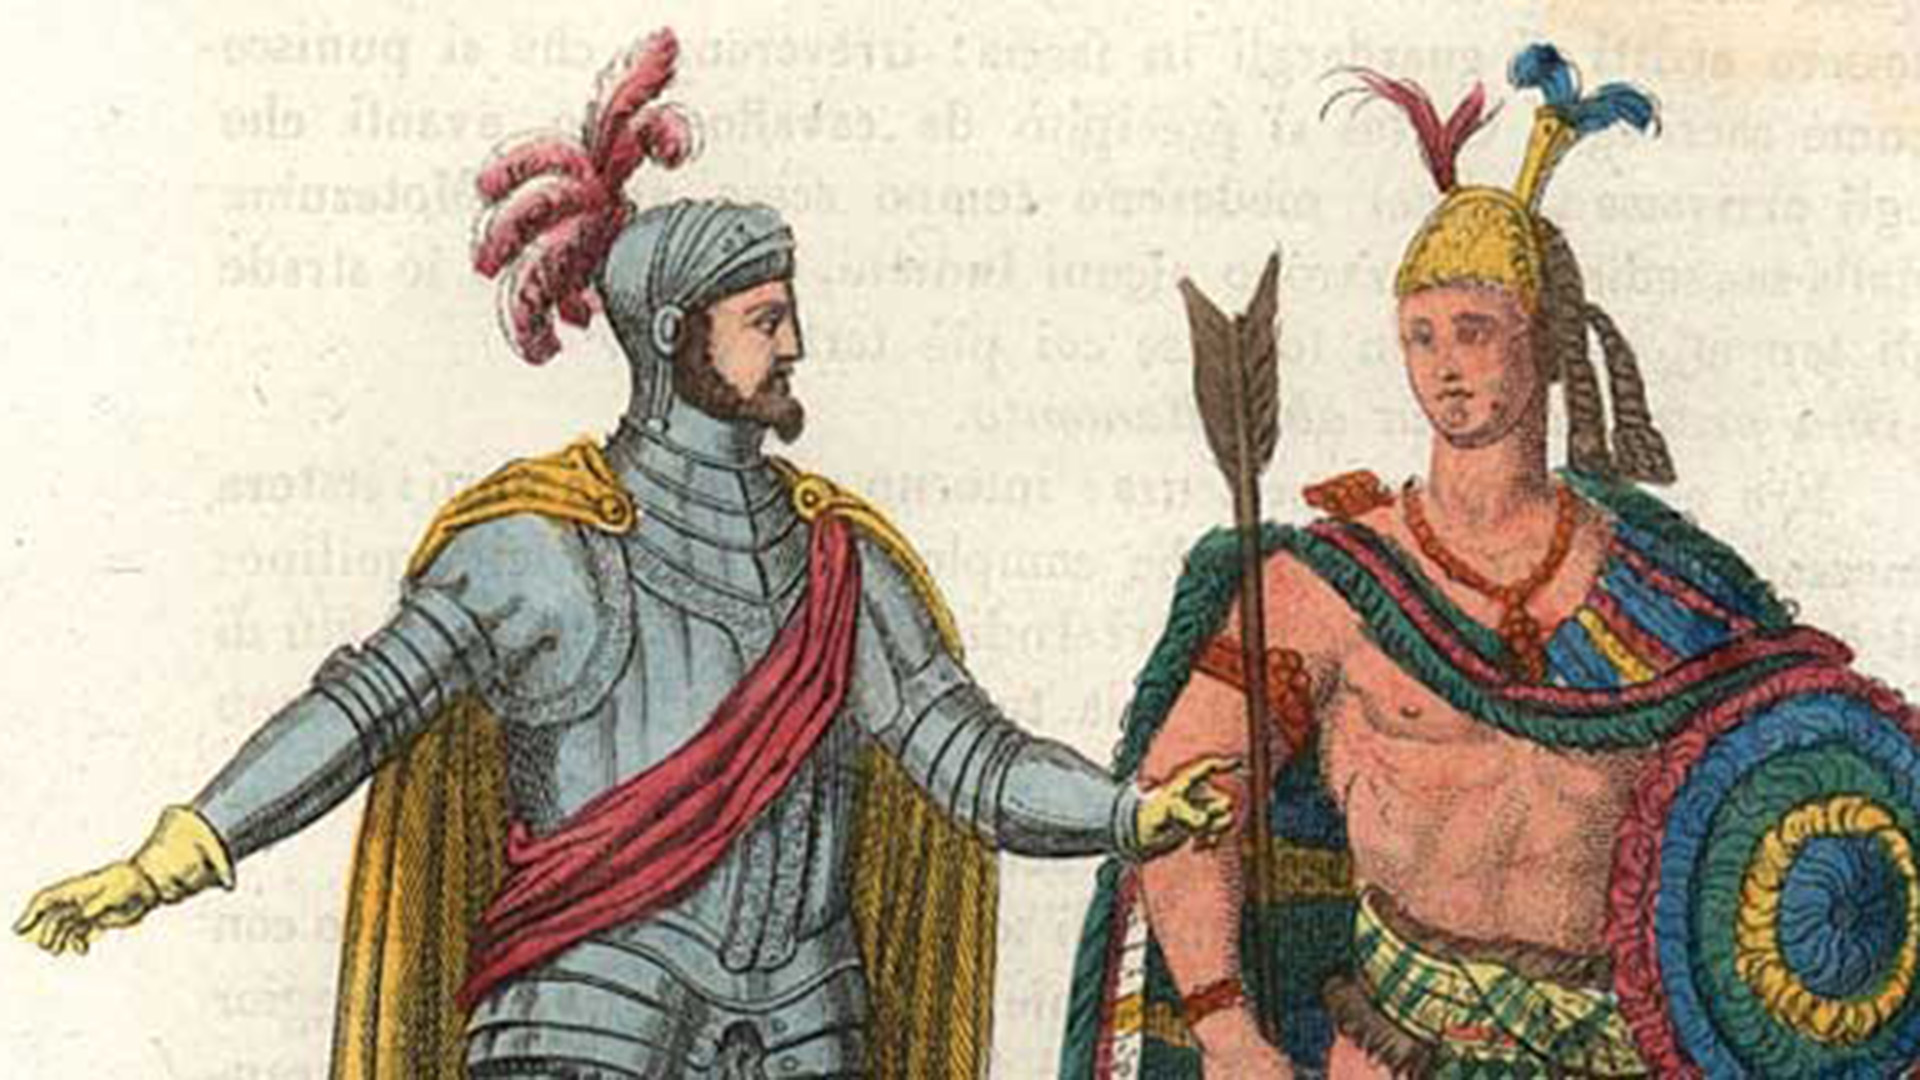 El emperador Moctezuma II y Hernán Cortés. (imagen: lahistoriamexicana.mx)